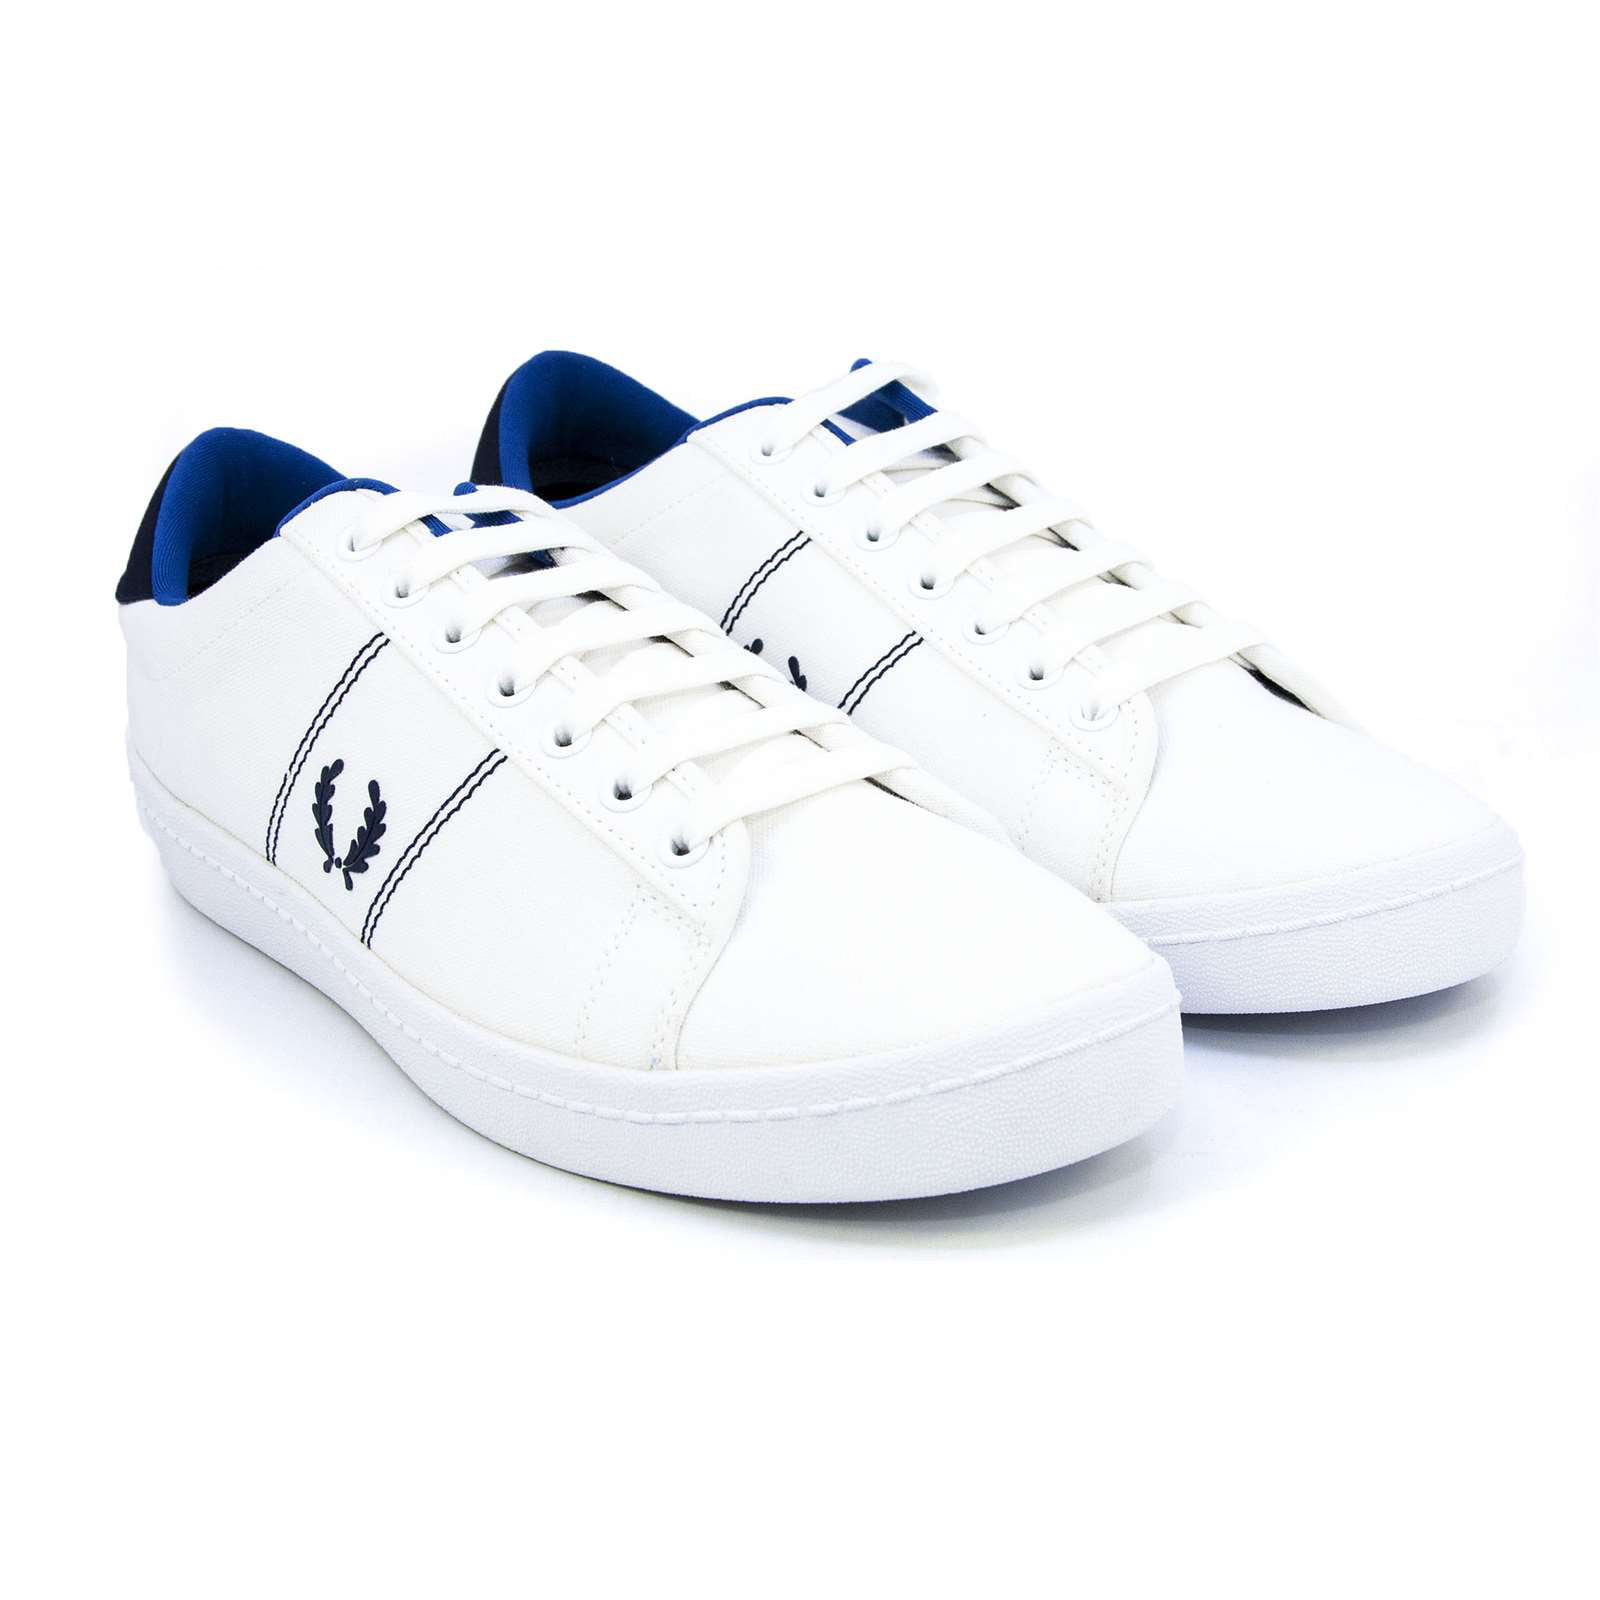 white canvas tennis shoes walmart